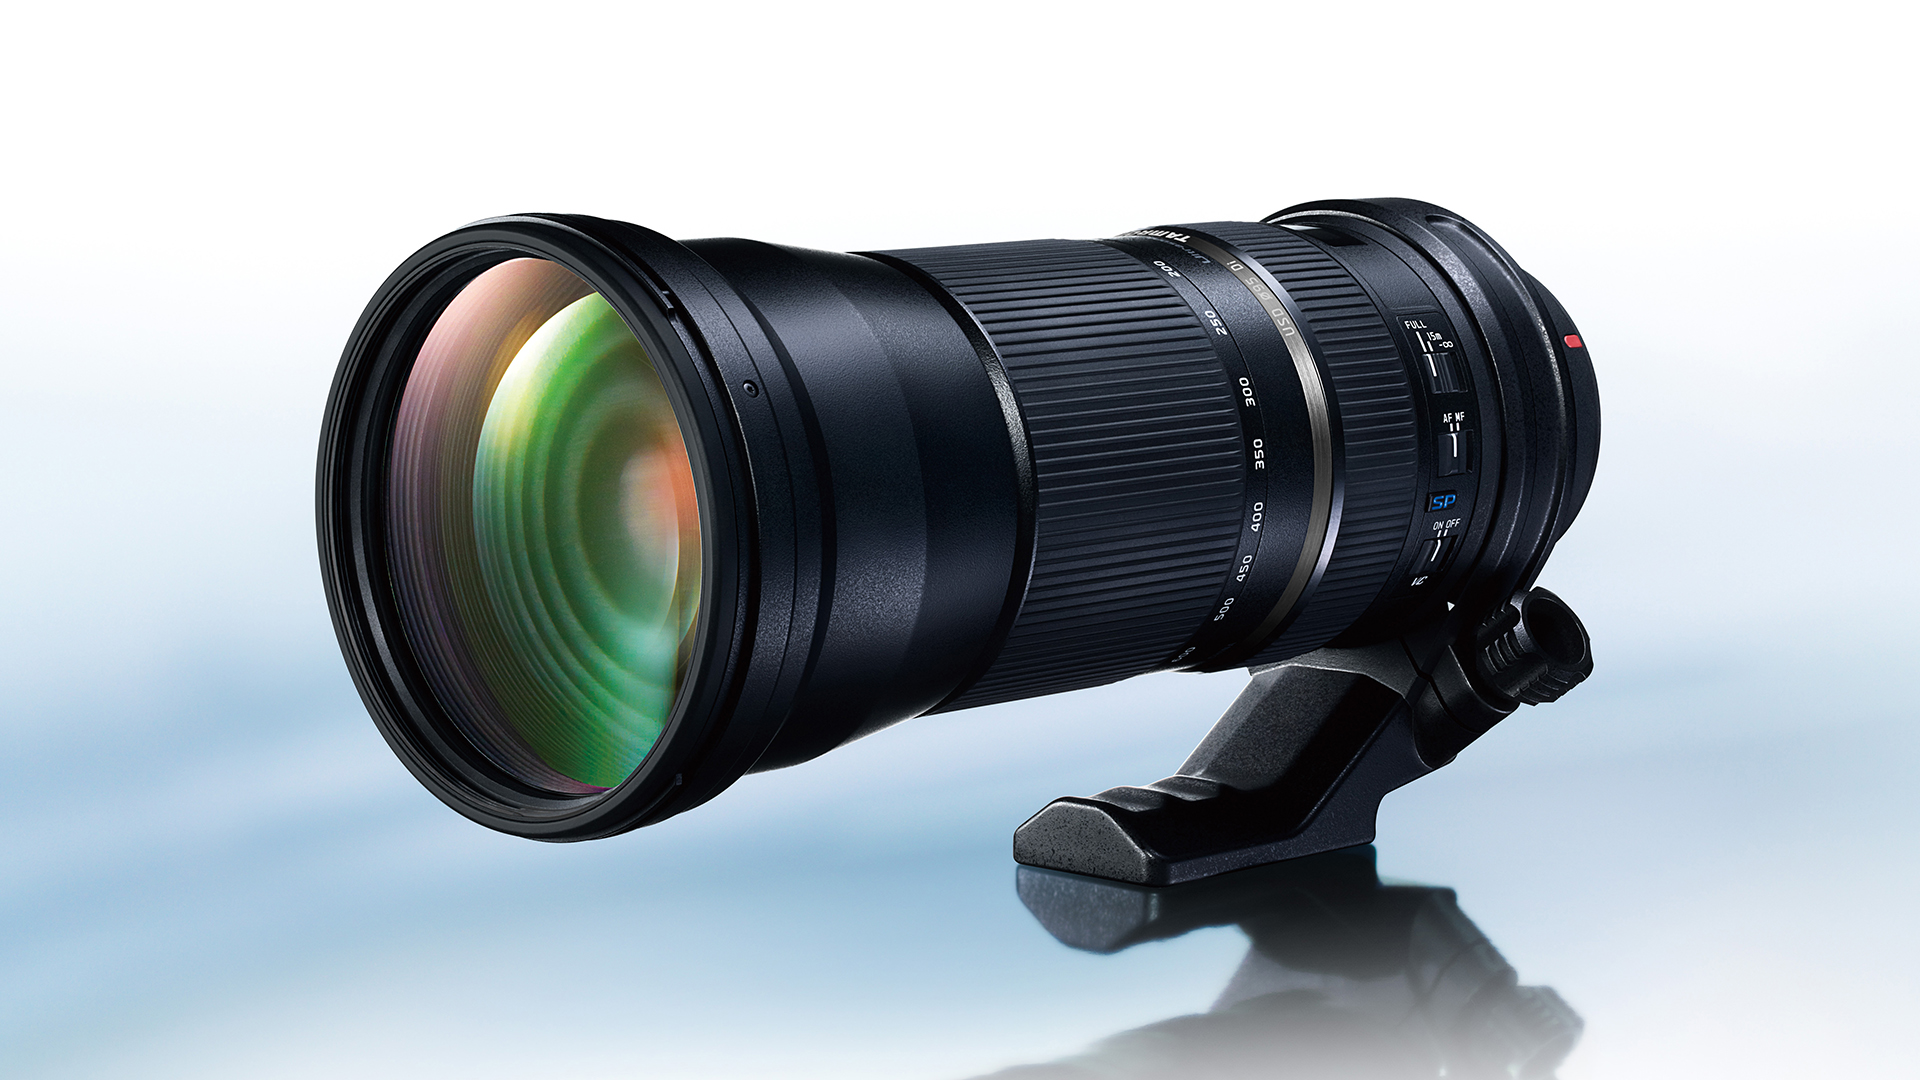 Tamron 150-600mm f/5-6.3 di VC USD g2. Tamron 150-600mm Lens. Tamron 150-600 a011. Объектив body